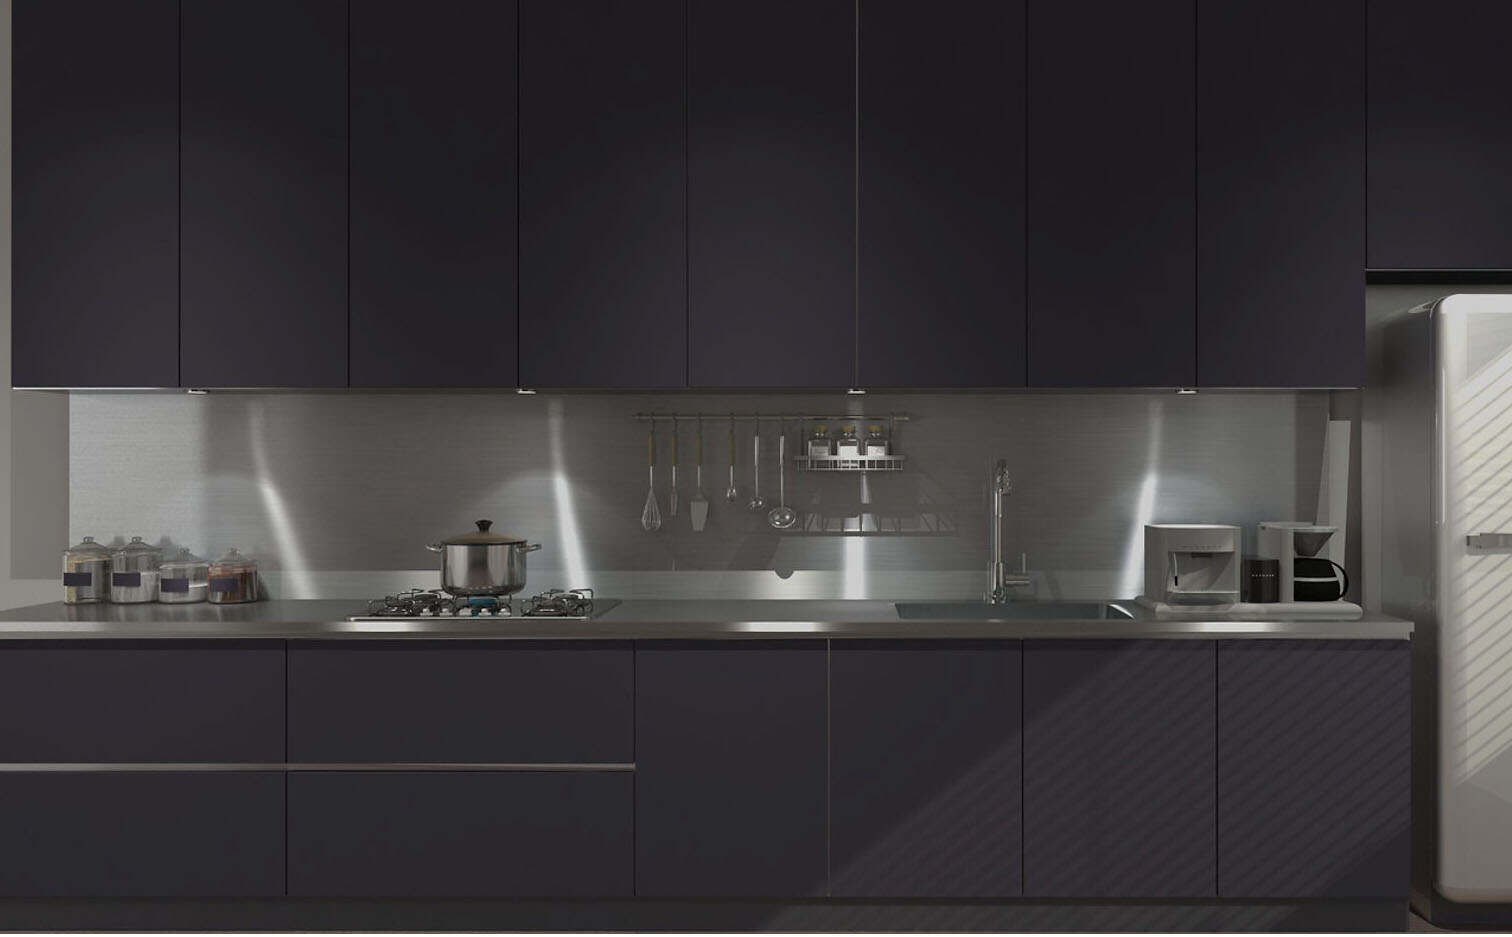 Wood-free stainless steel kitchen design ideas